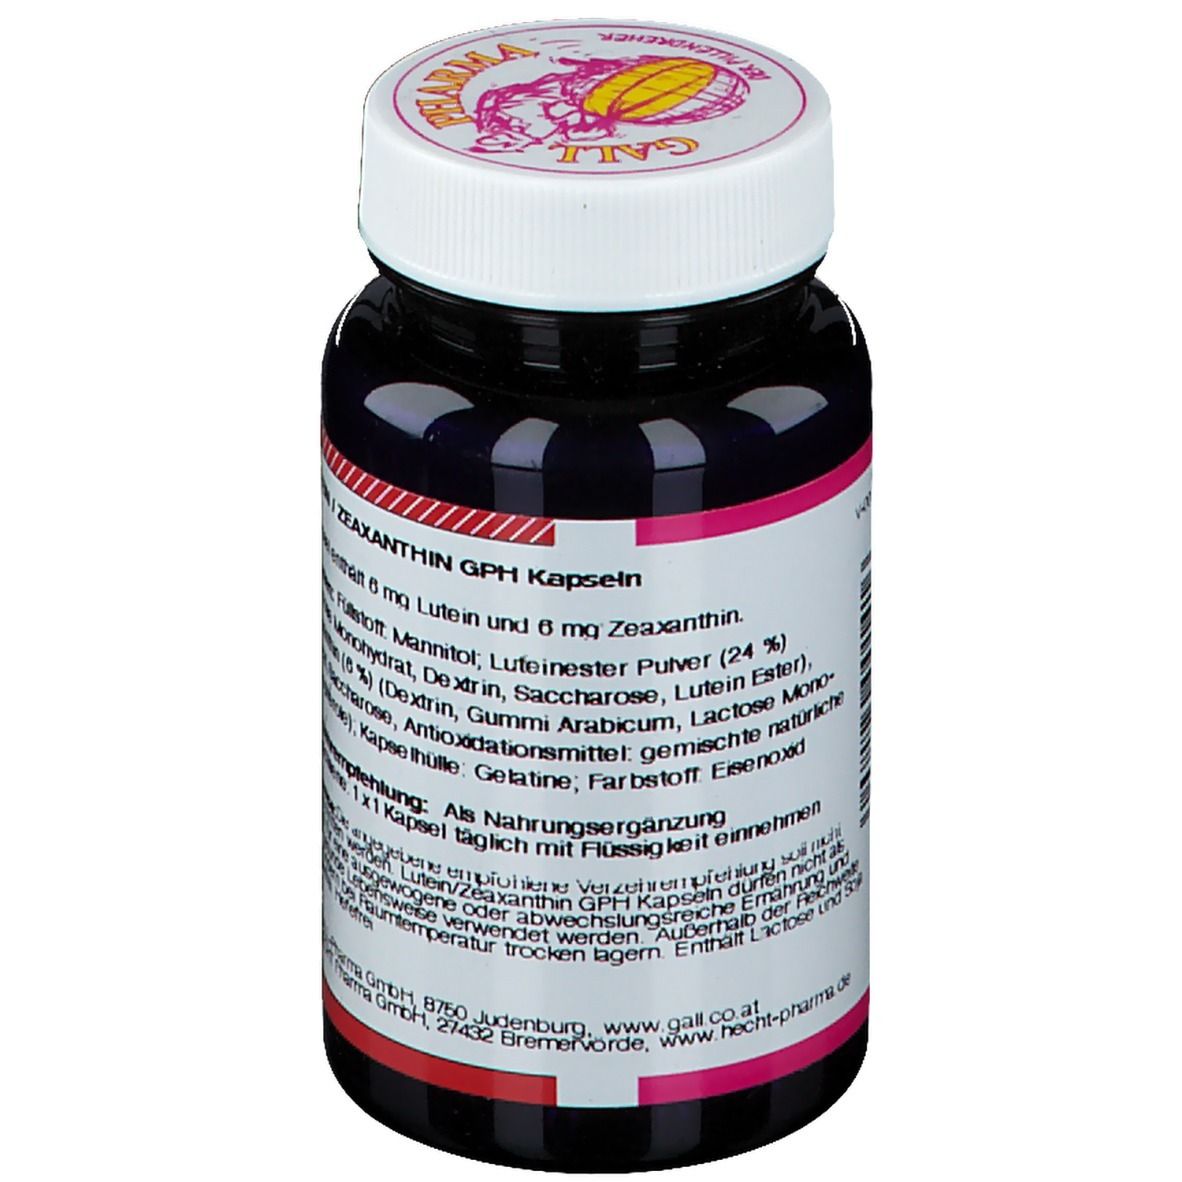 GALL PHARMA Lutein 10 mg GPH Kapseln